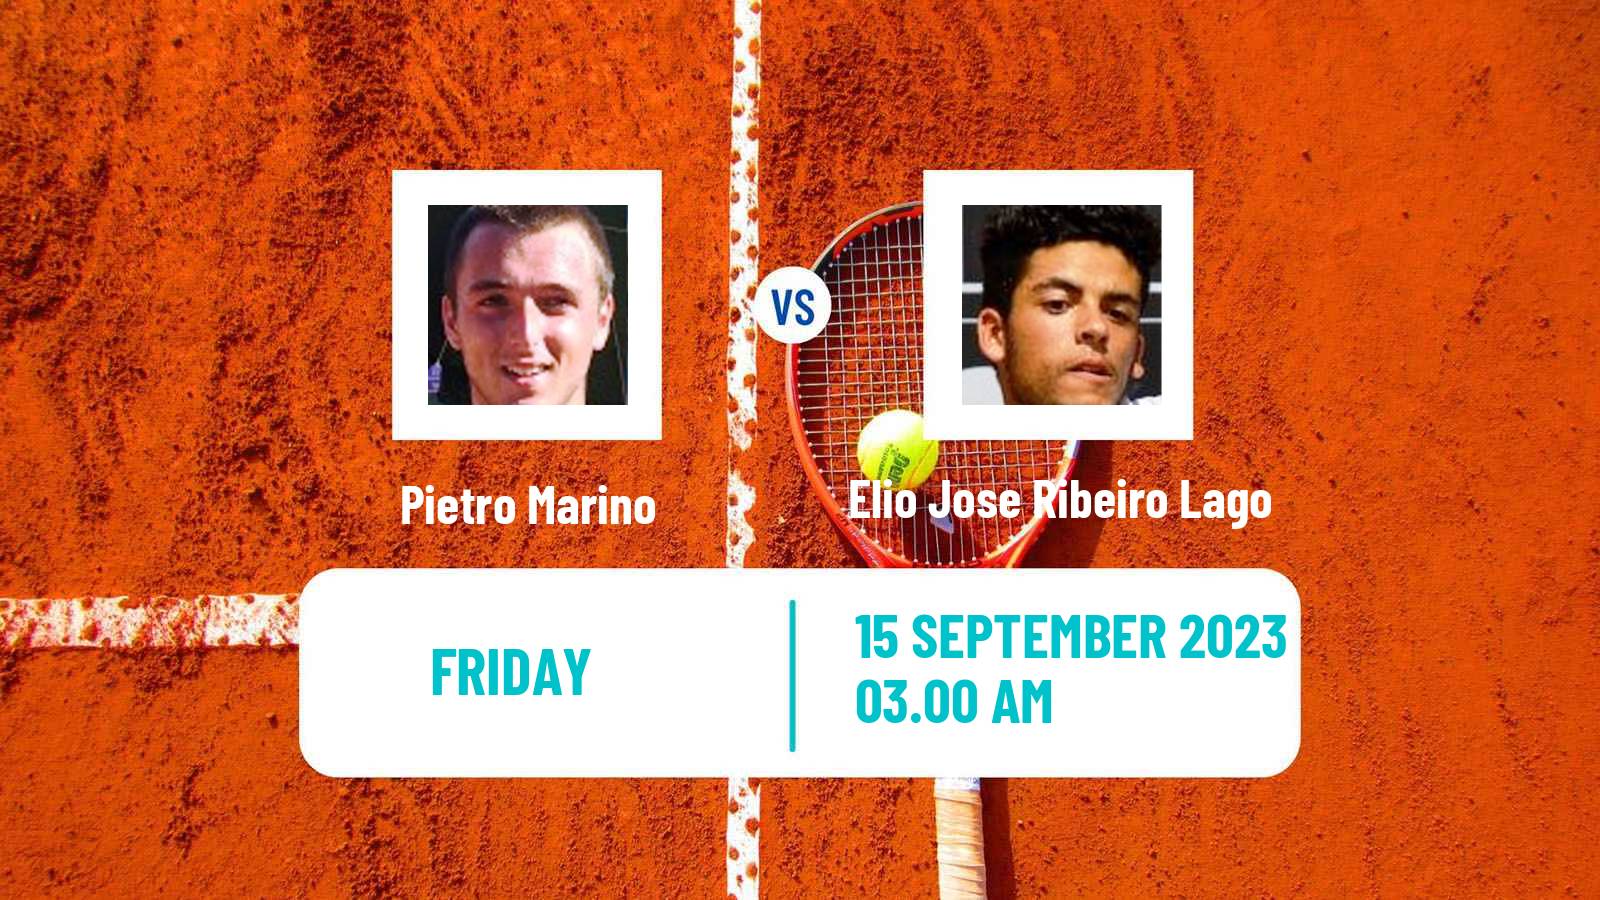 Tennis ITF M15 Satu Mare Men Pietro Marino - Elio Jose Ribeiro Lago